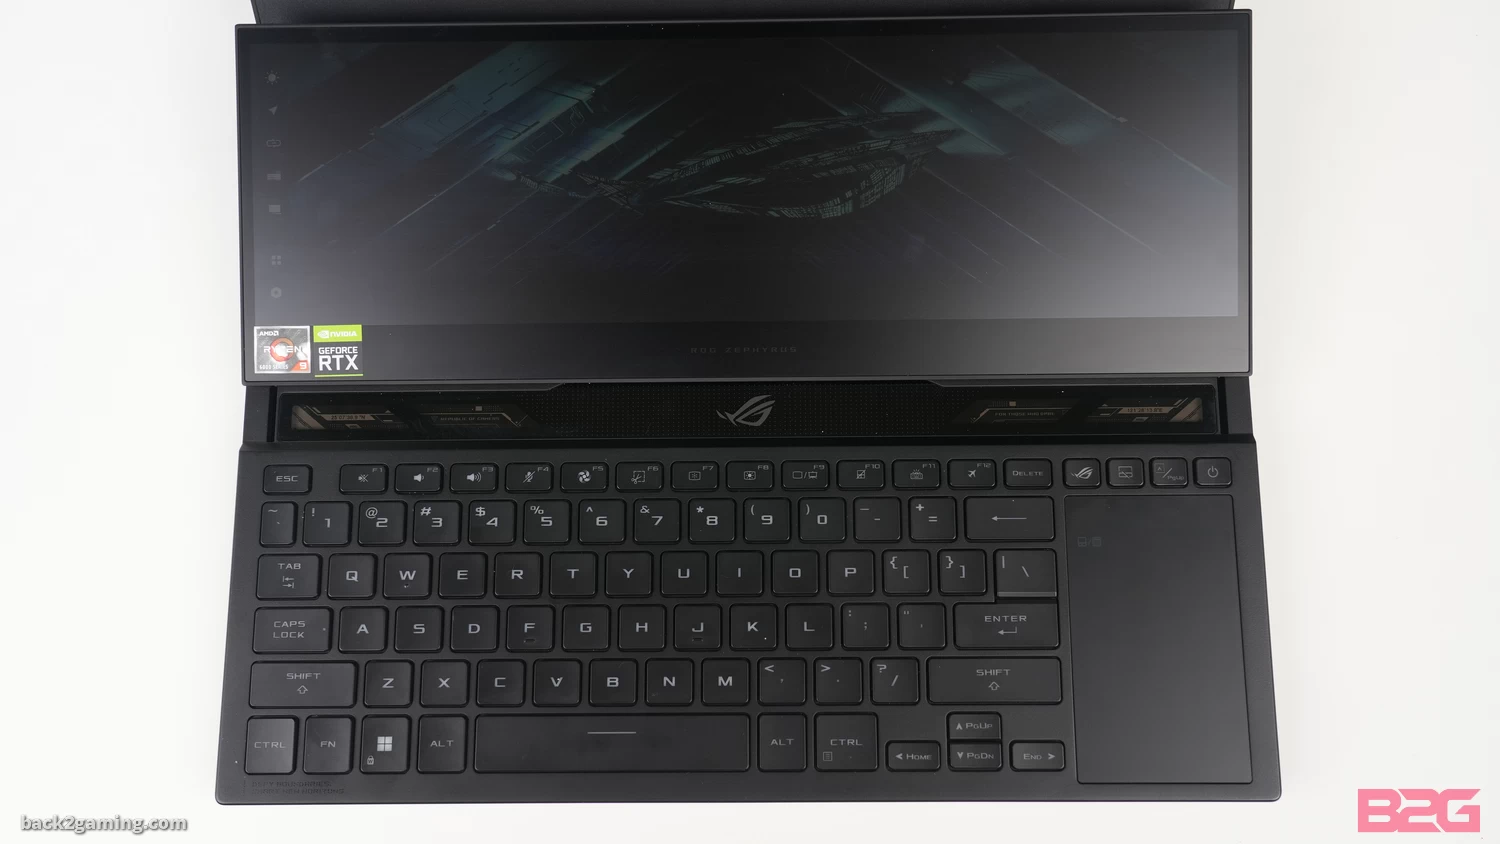 Rog Zephyrus Duo 16 2022 (R9-6900Hx+Rtx 3080 Ti) Laptop Review